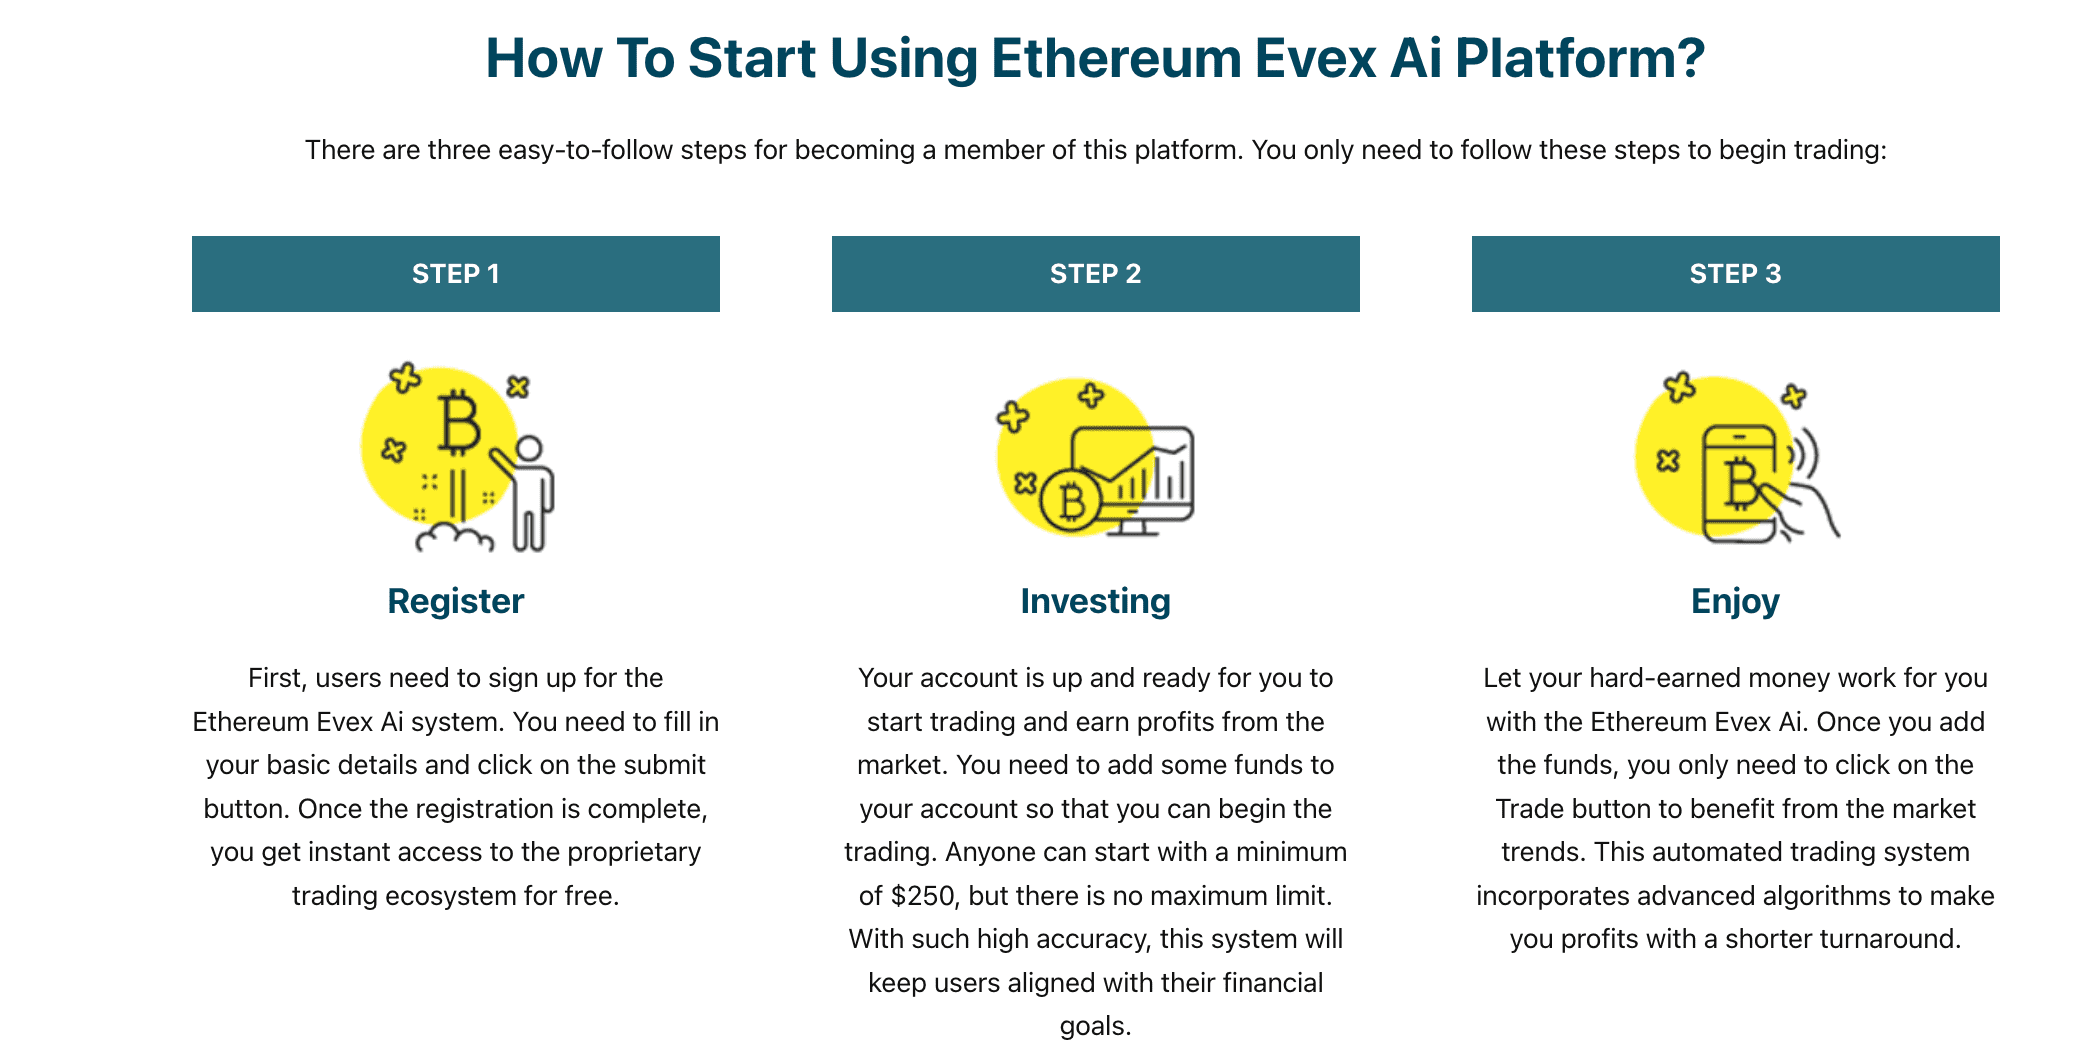 Ethereum Evex Ai 플랫폼 사용을 시작하는 방법은 무엇입니까?  